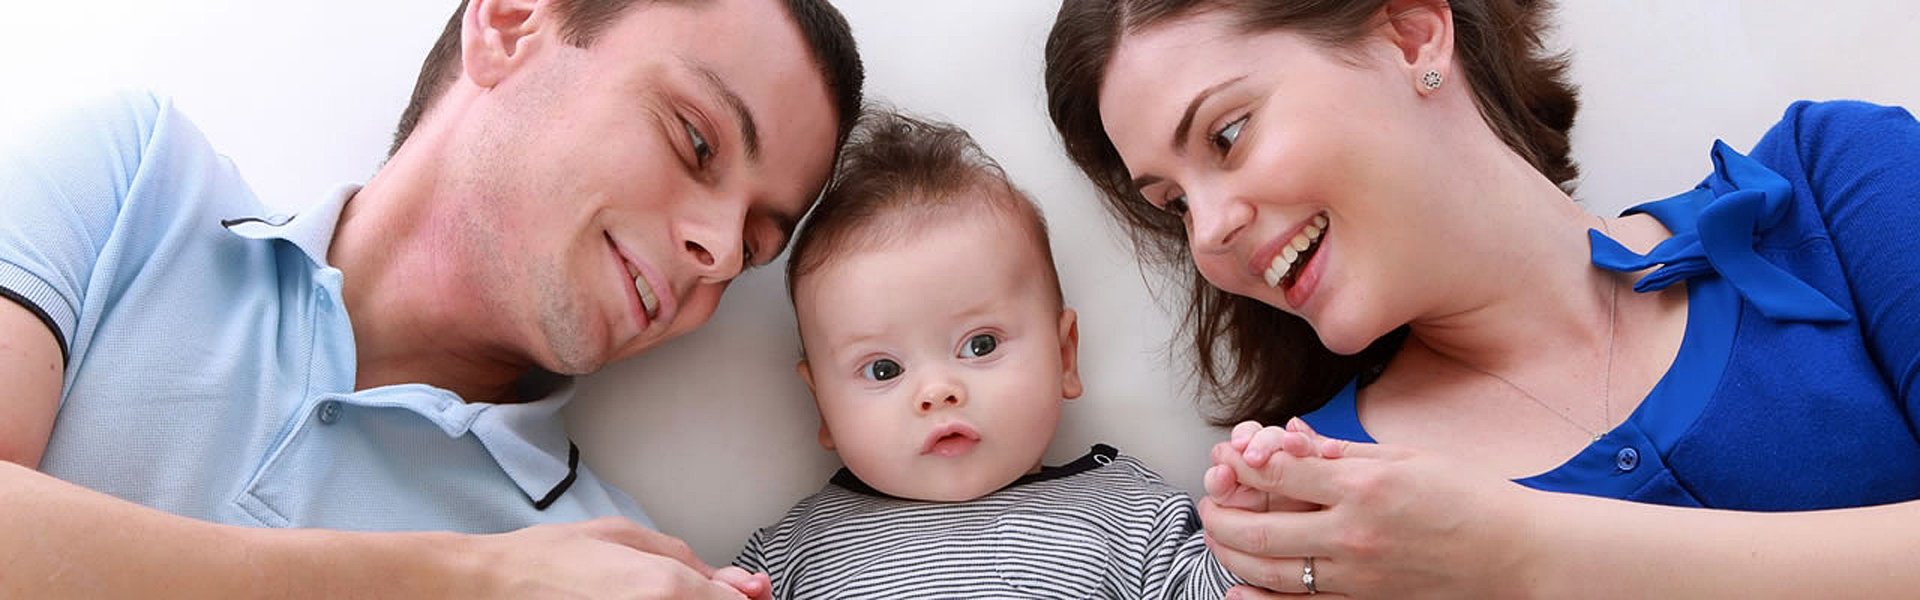 Mum, dad and baby | Bump & Baby Workshop at Holmwood Clinic